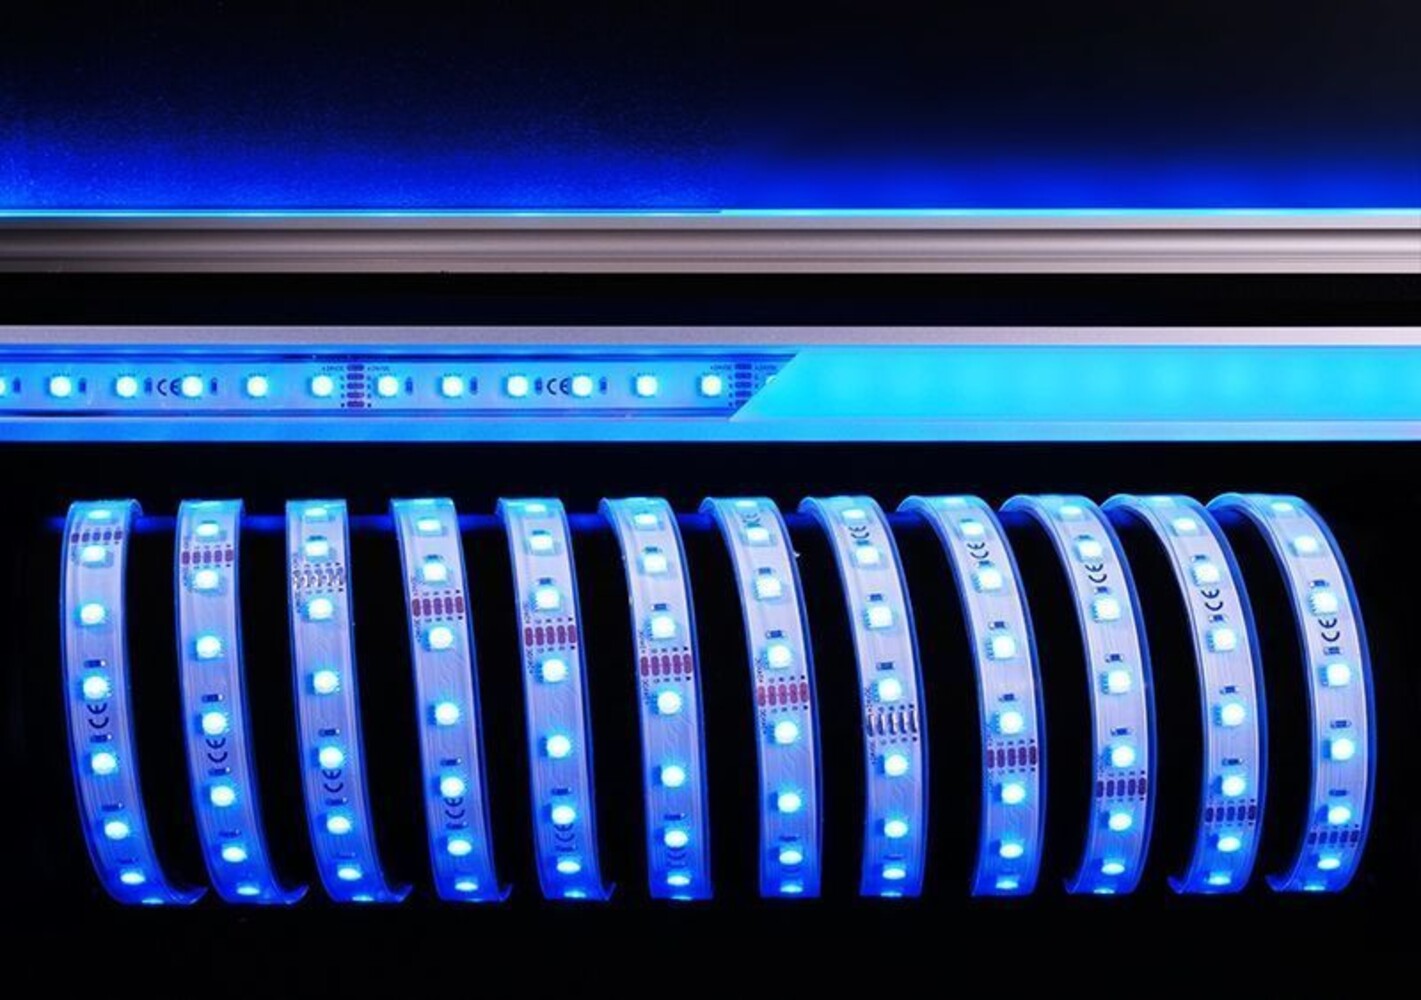 Farbenfroher flexibler Deko-Light LED Streifen in 3000K Wärme